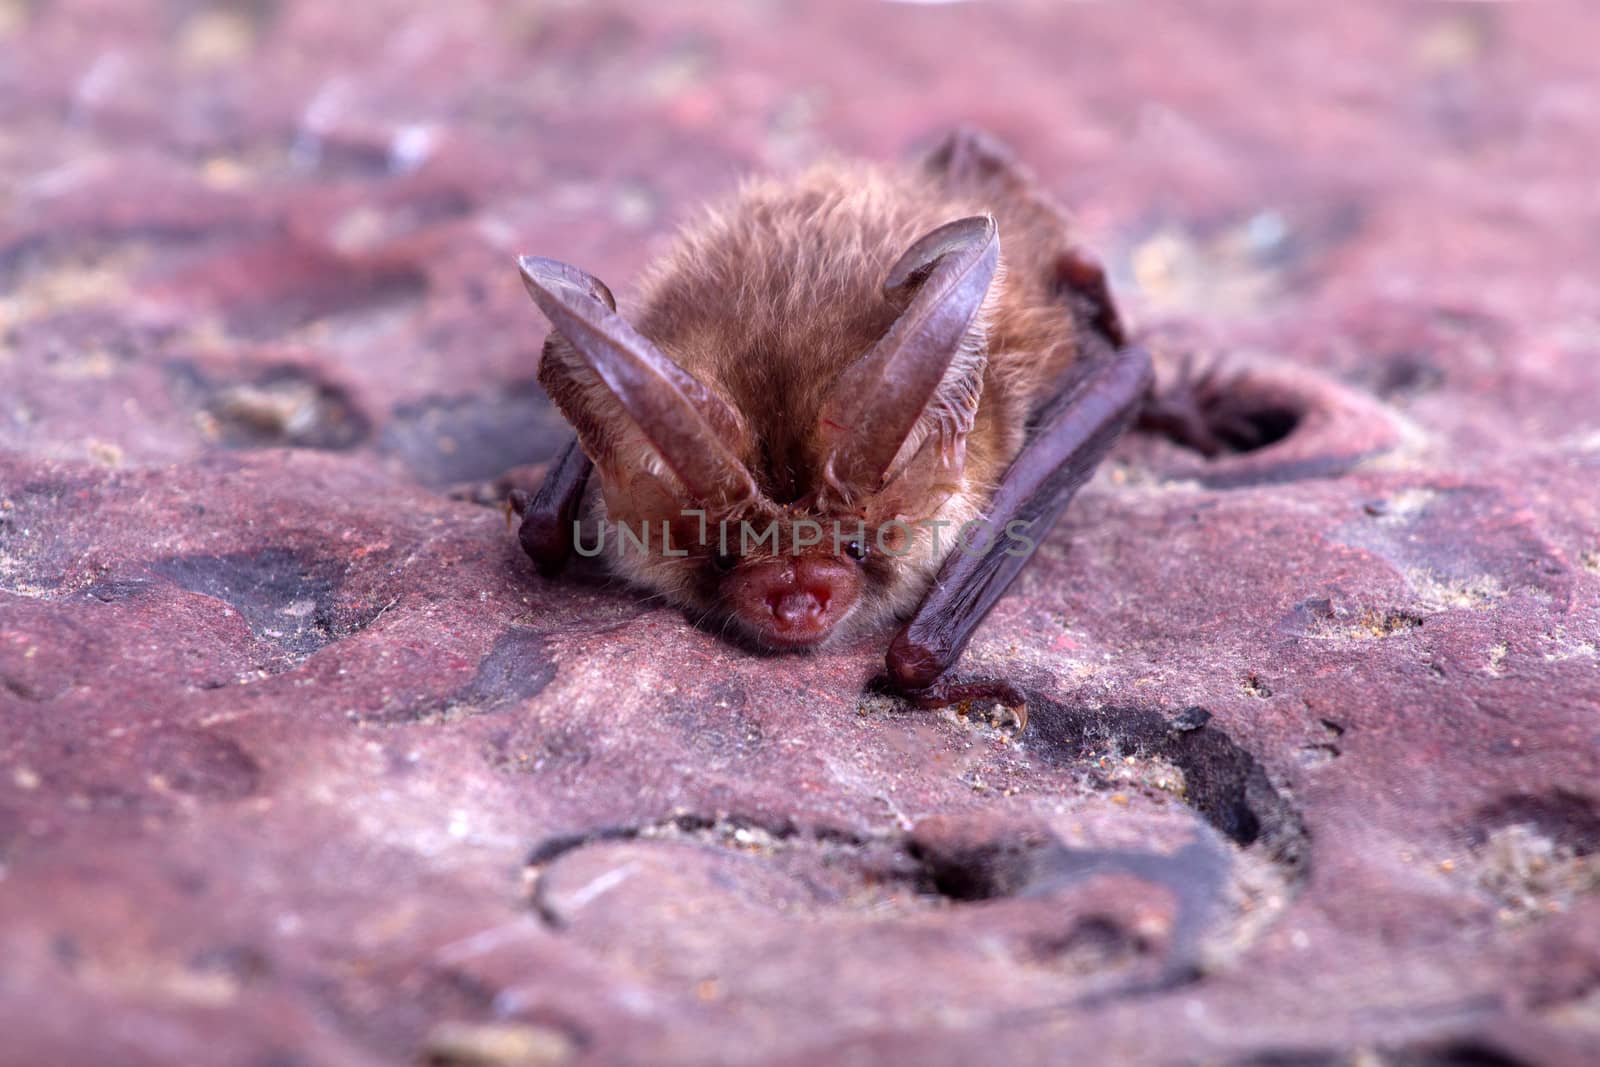 bat close up on a stone background